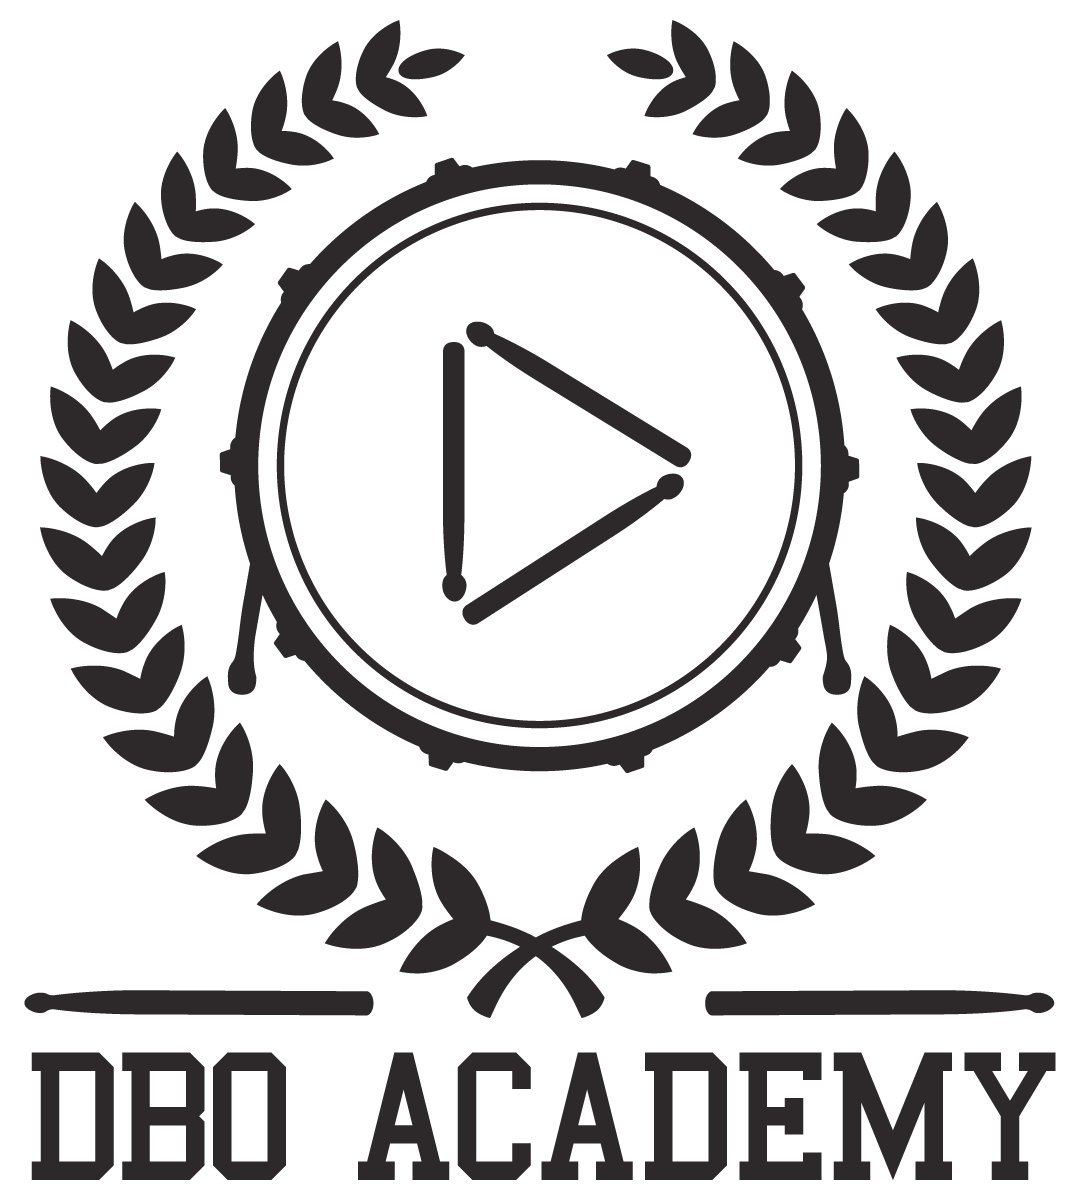 DBO Academy